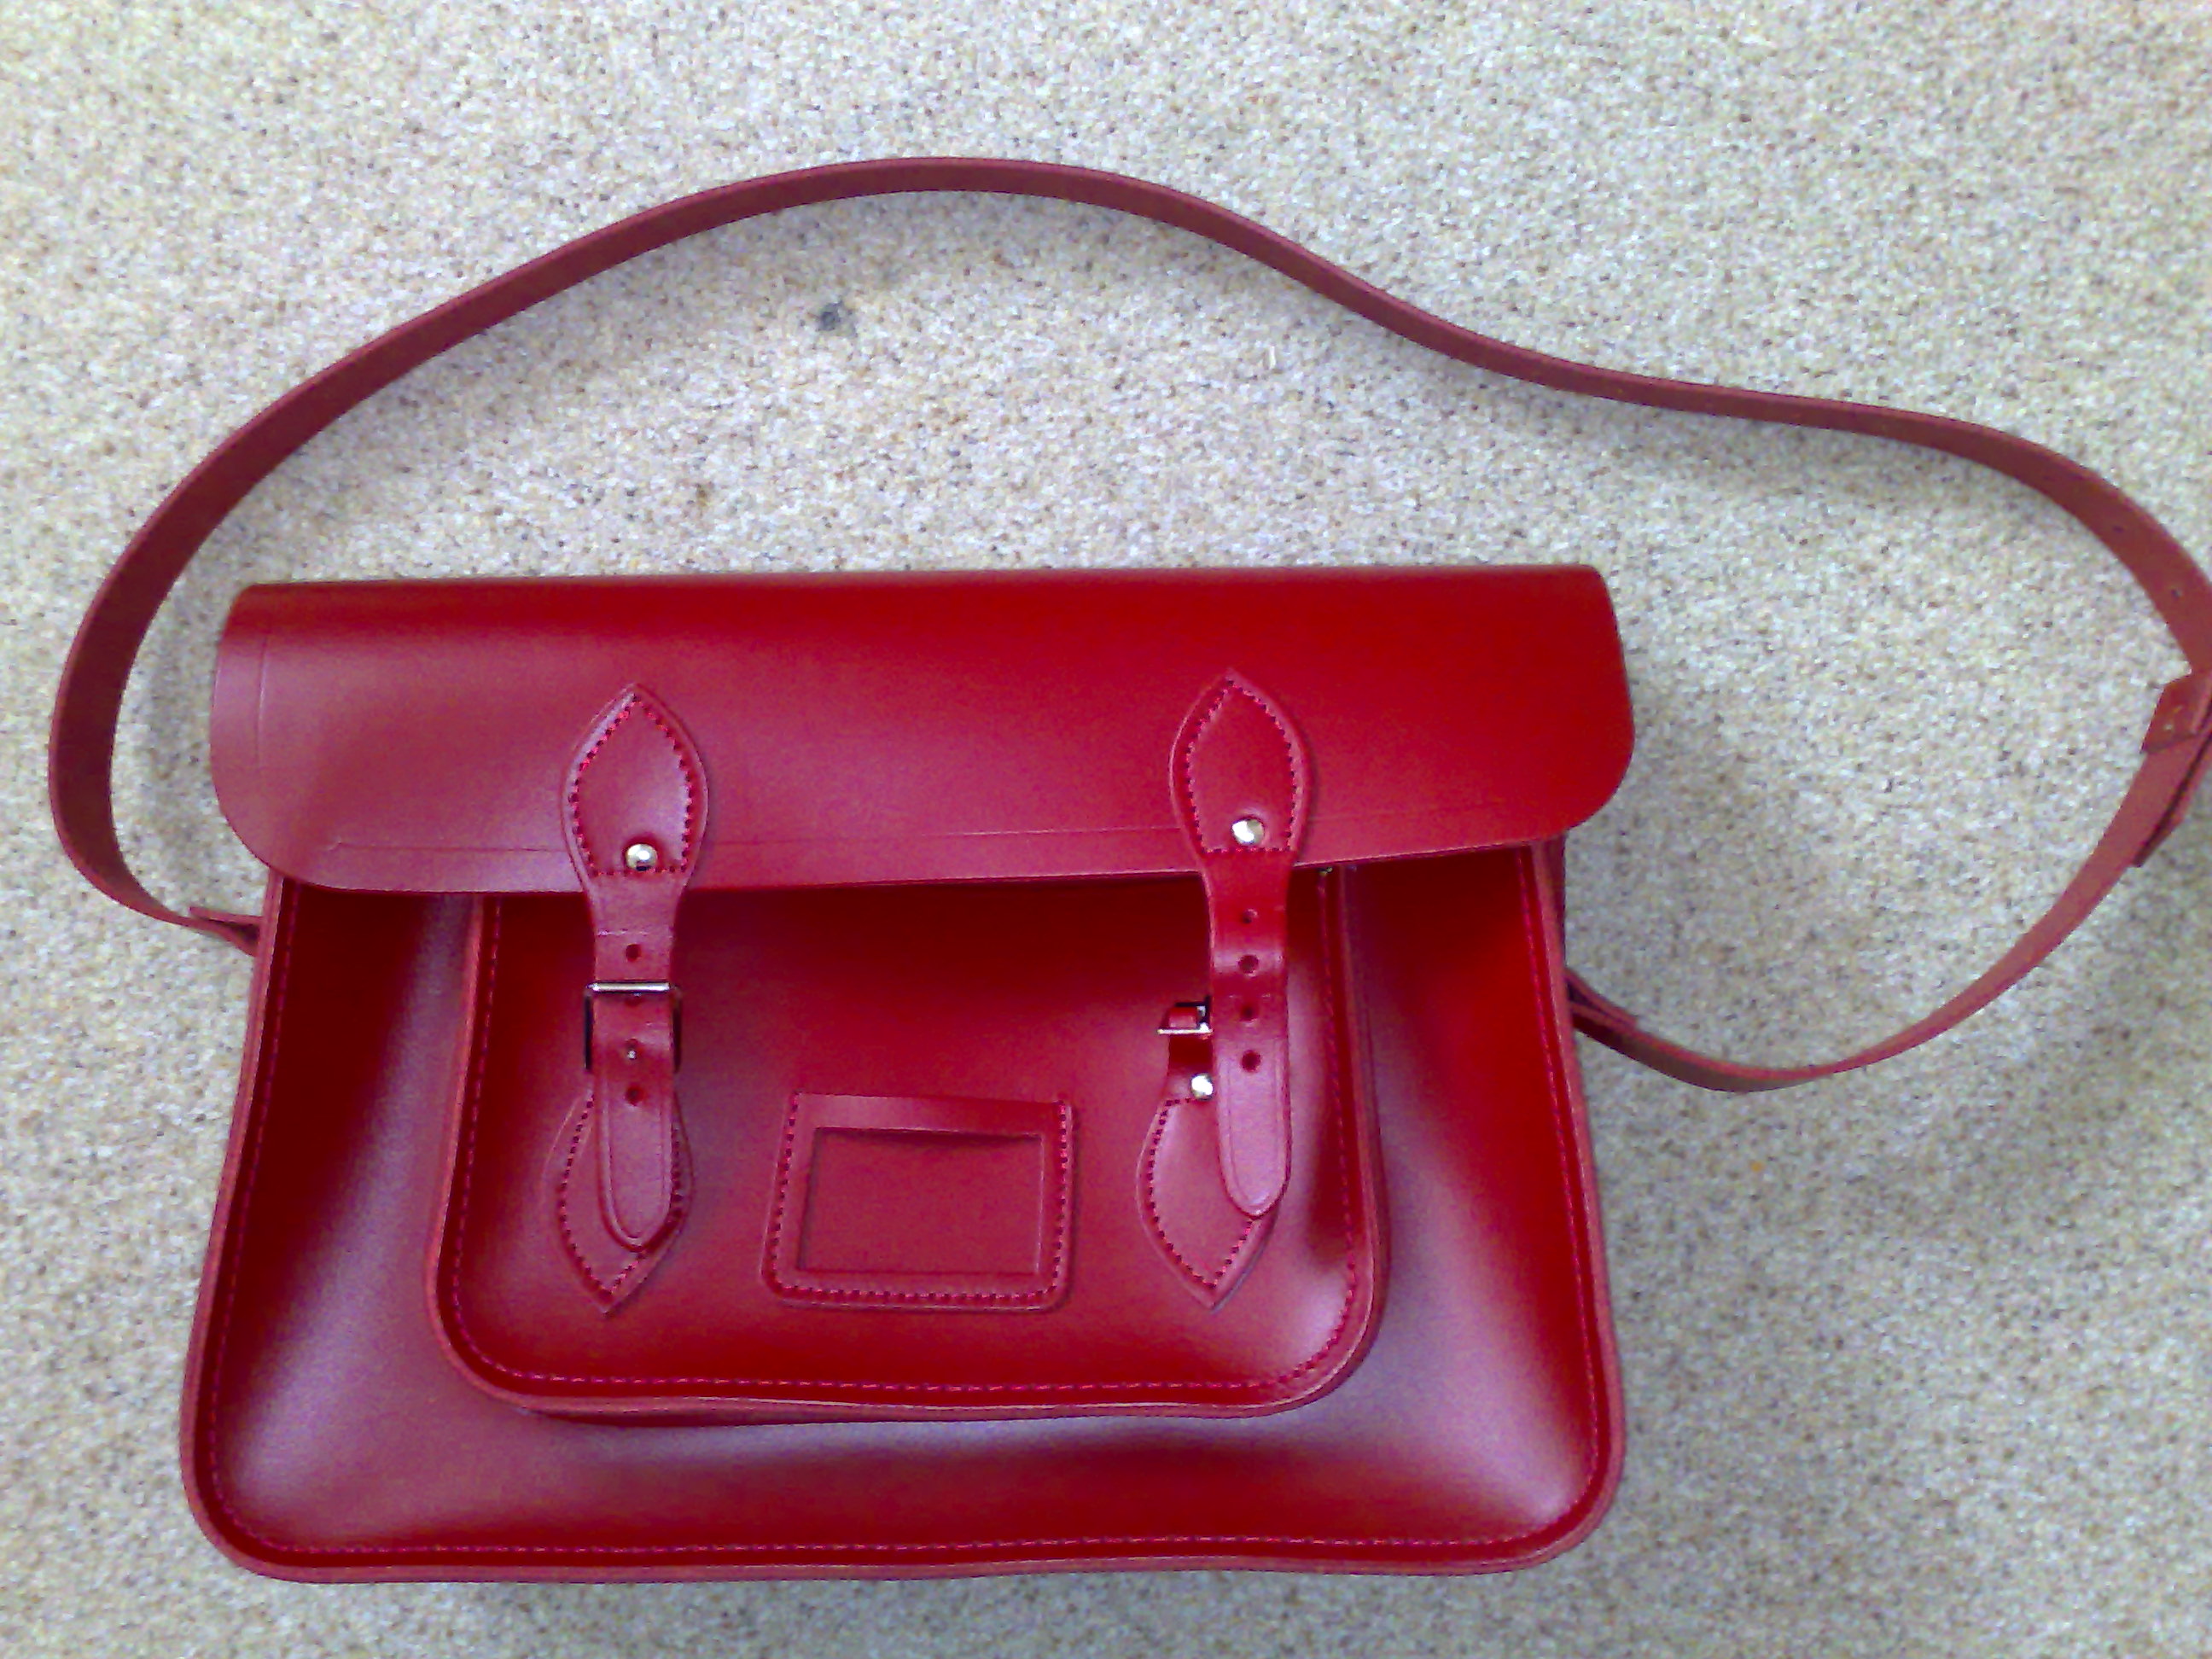 Red satchel by Cambridge Satchel Company